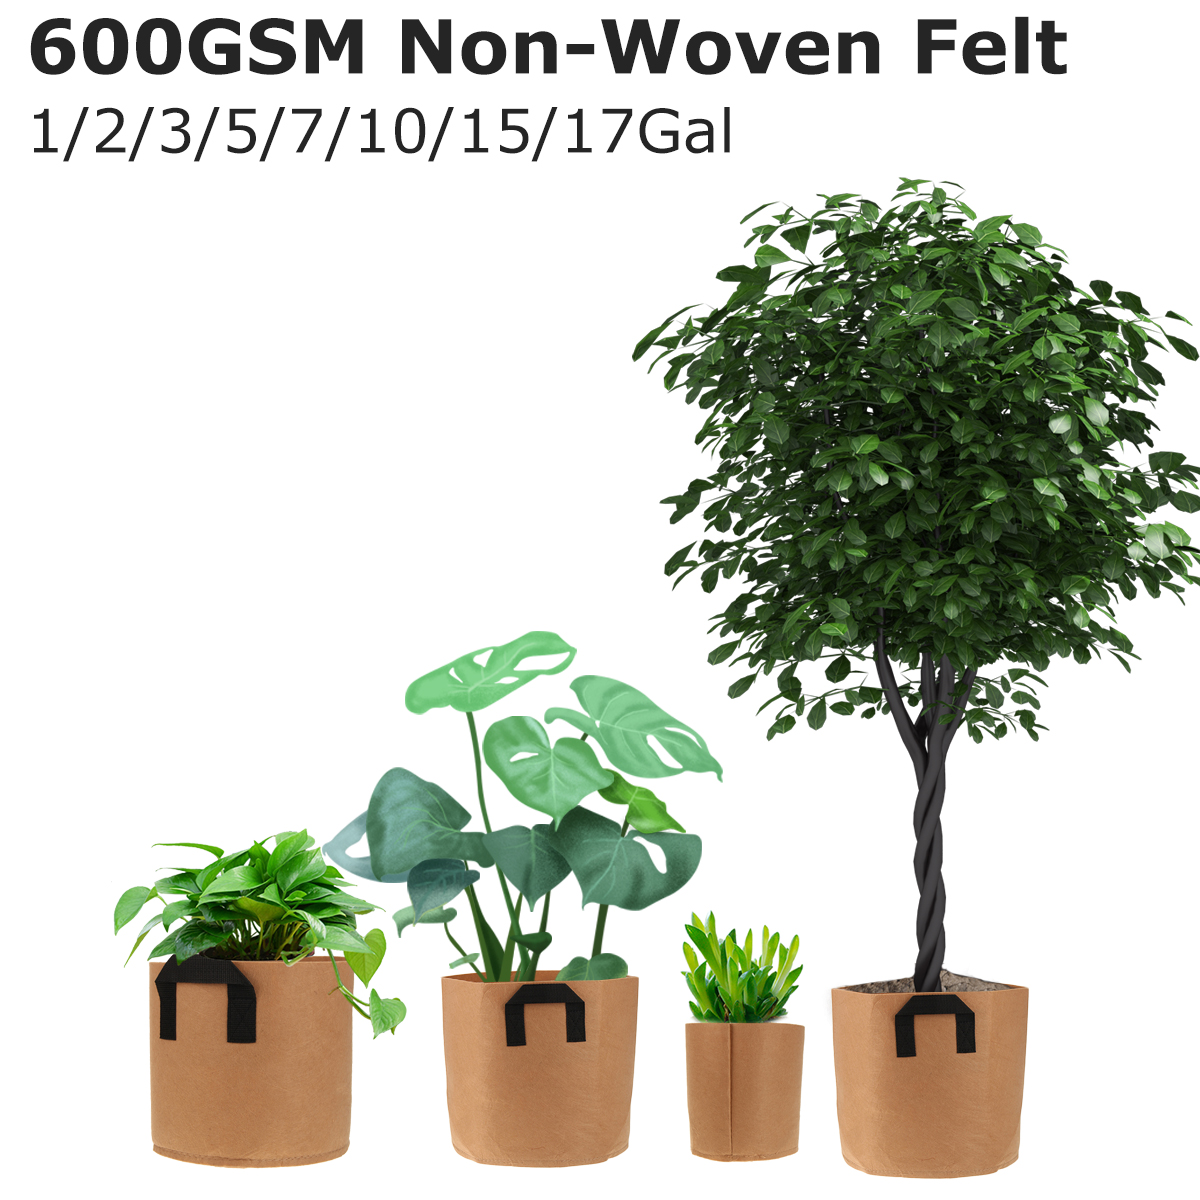 12357101520Gal-Round-Planting-Grow-Box-Container-Non-Woven-Felt-Planter-Pot-Plants-Nursery-Seedling--1670668-2